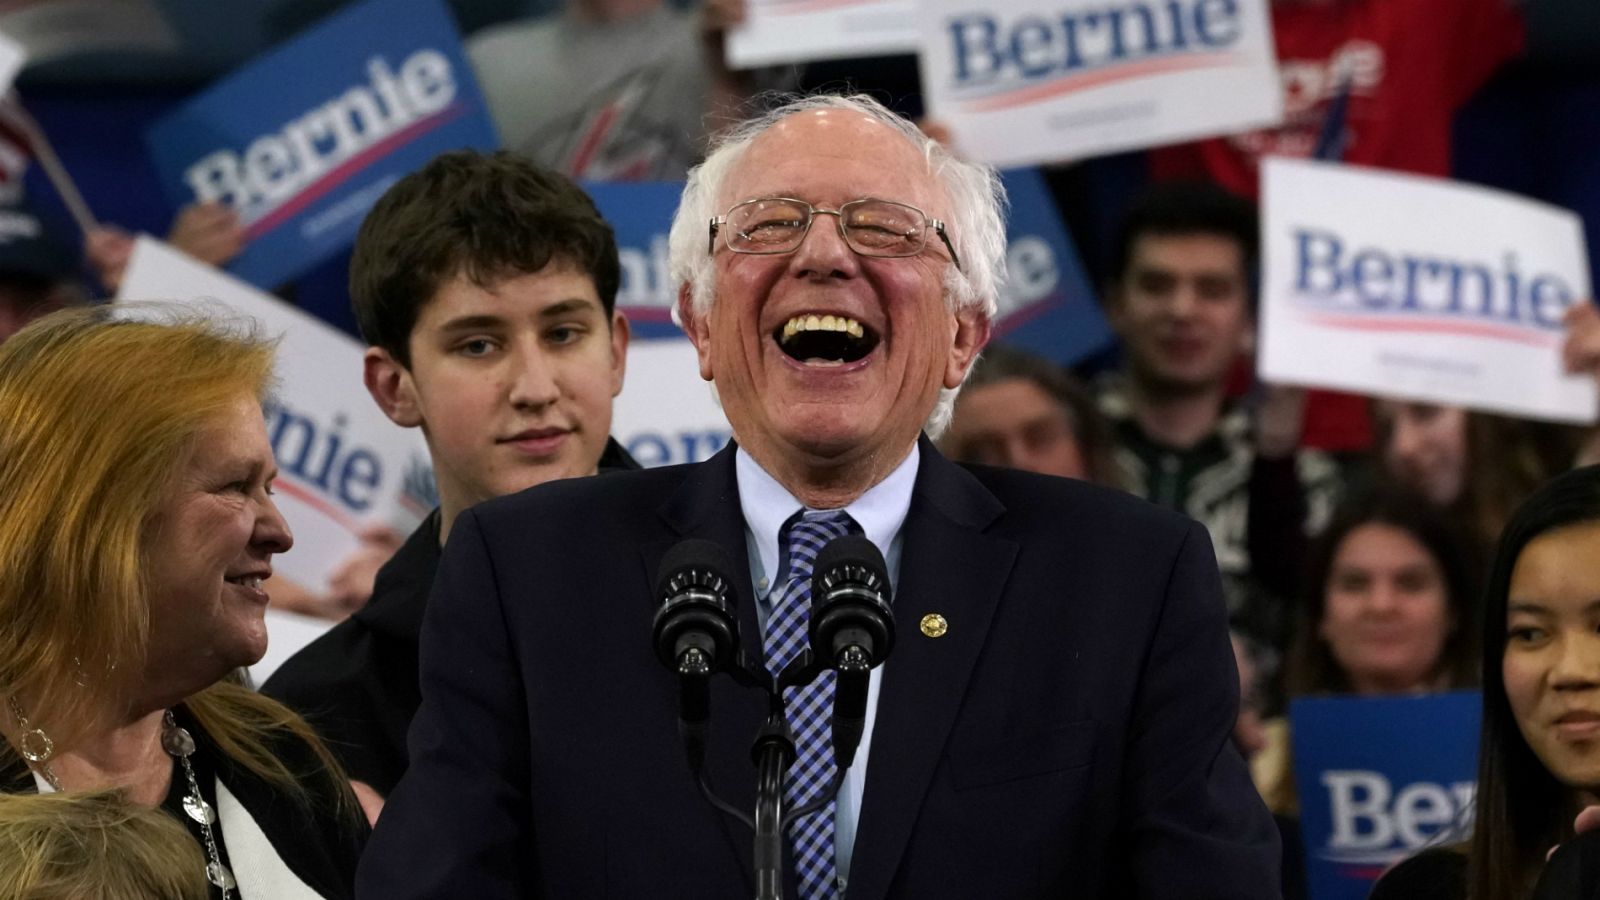 Primarias demócratas | Bernie Sanders gana las primarias demócratas en New Hampshire - RTVE.es